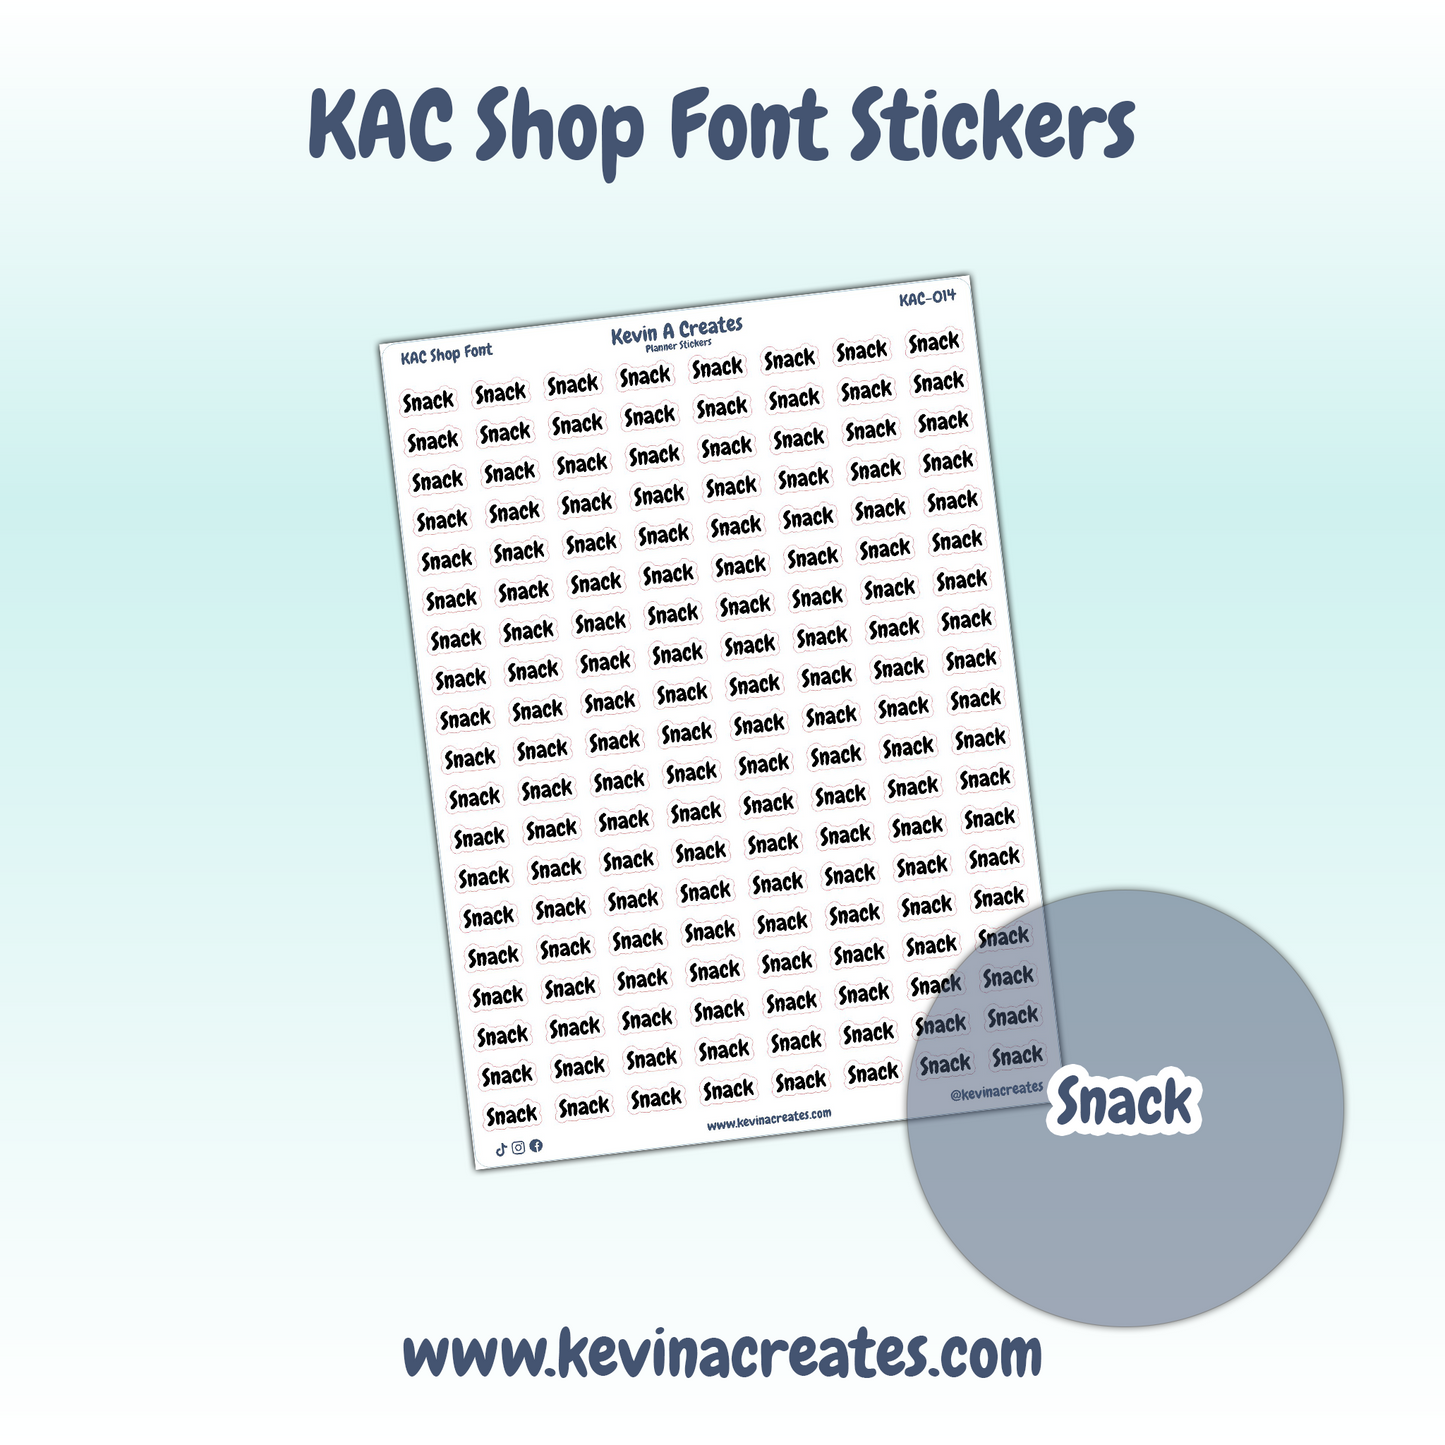 KAC-014, SNACK, Kevin A Creates Shop Font, Script Planner Stickers